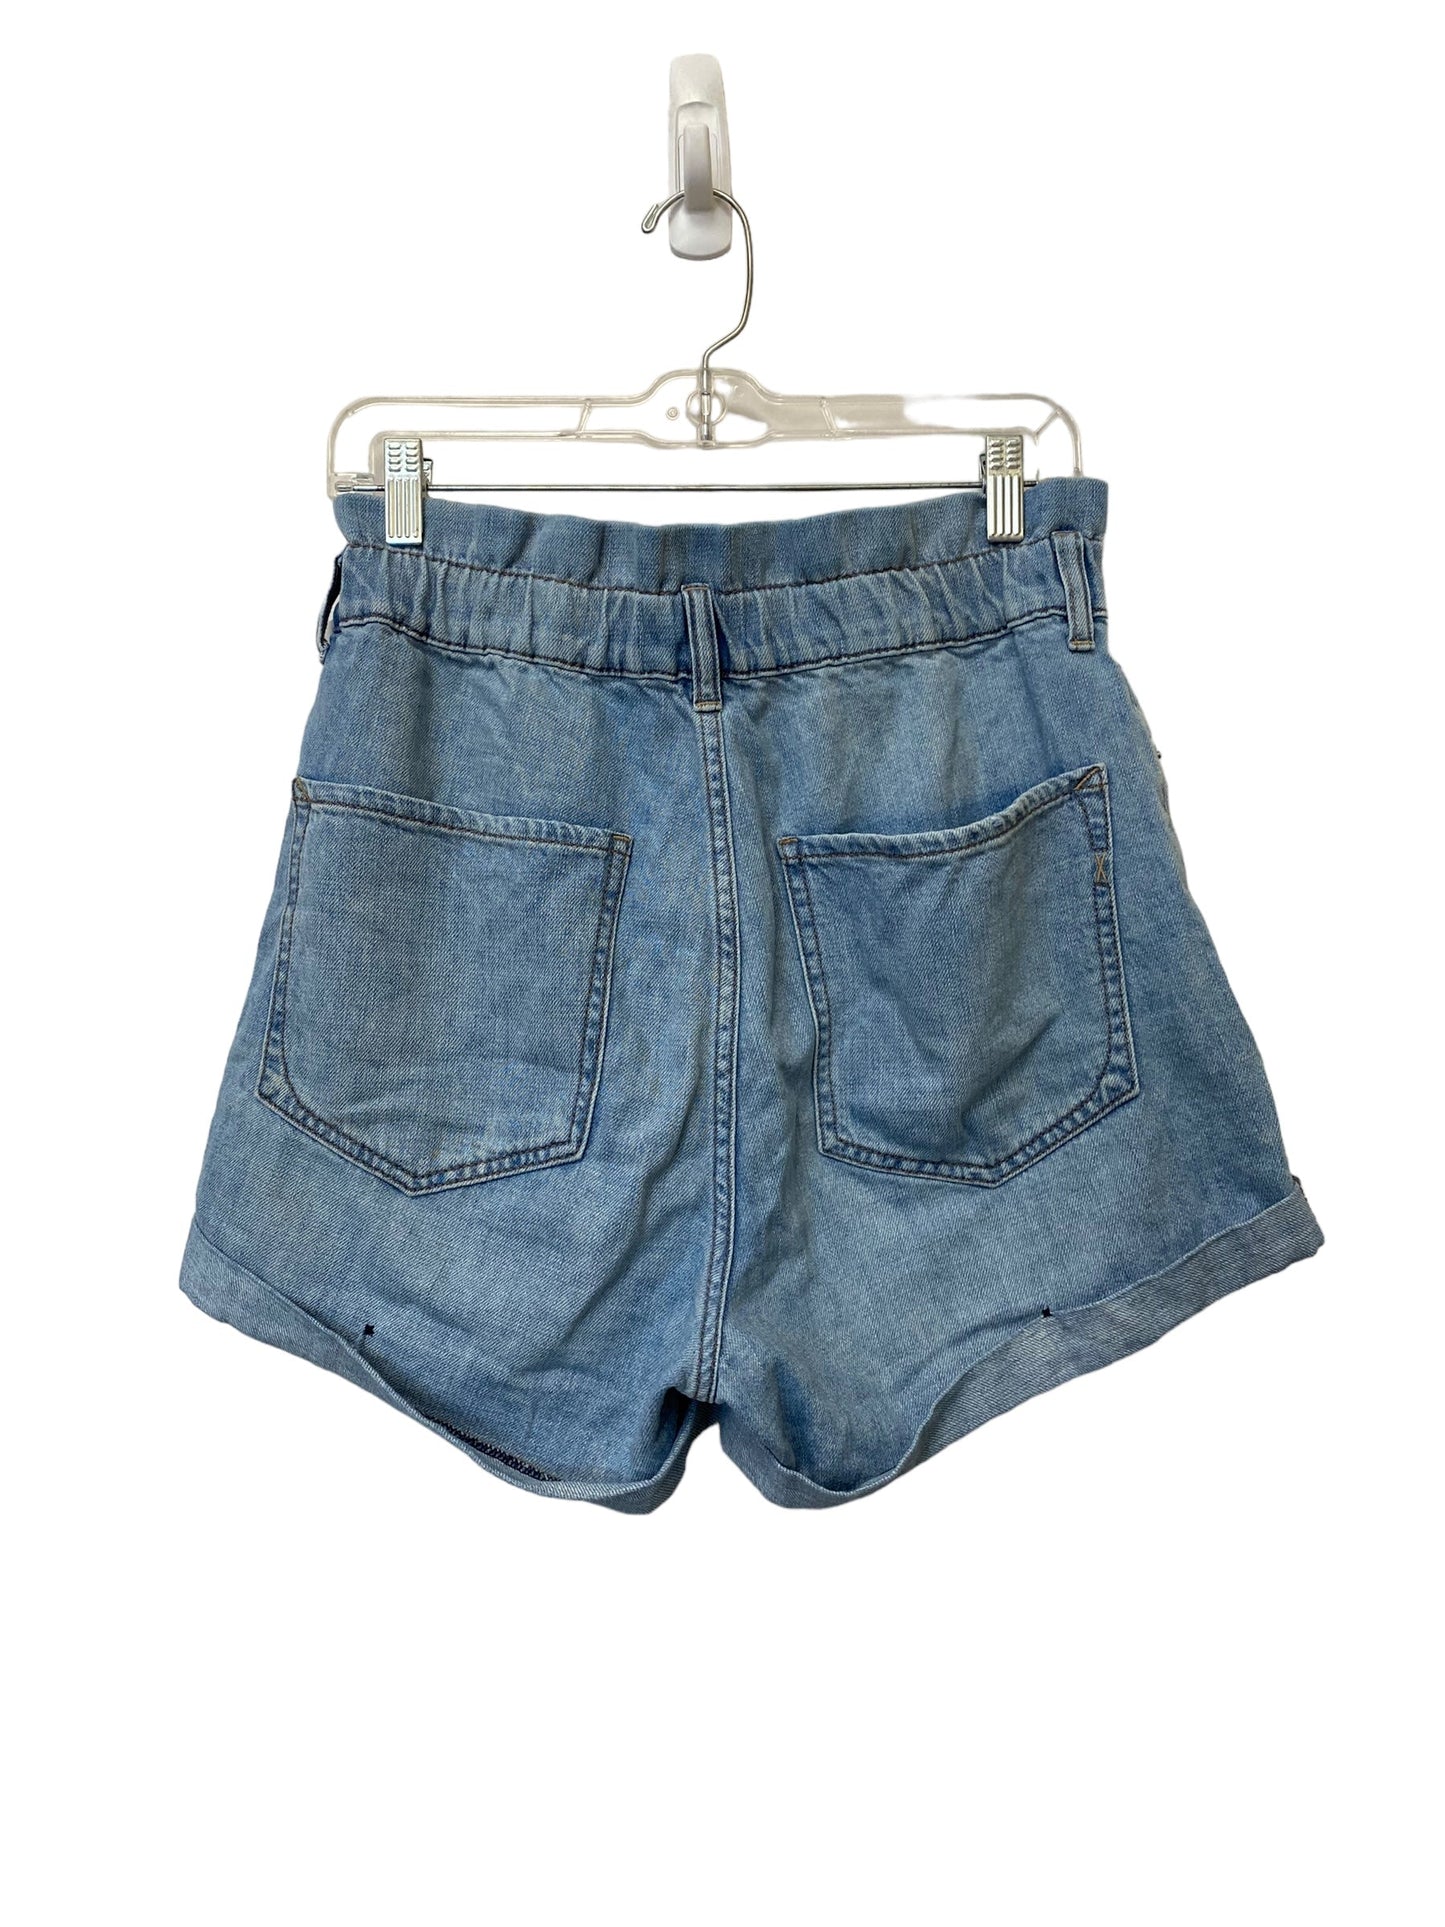 Blue Denim Shorts Express, Size M